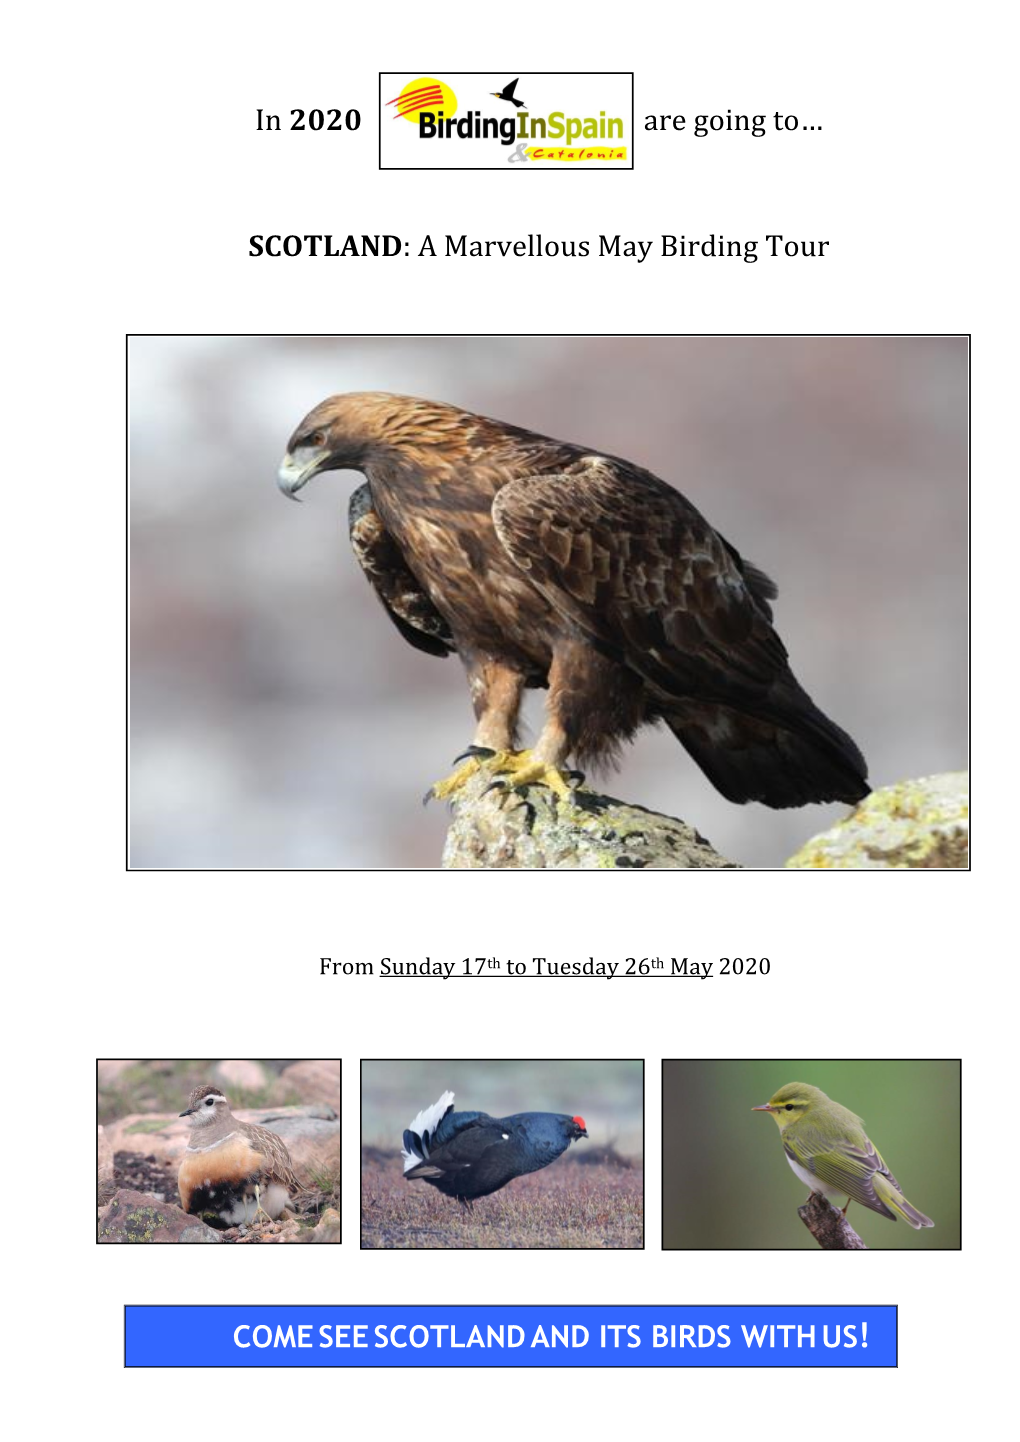 SCOTLAND: a Marvellous May Birding Tour